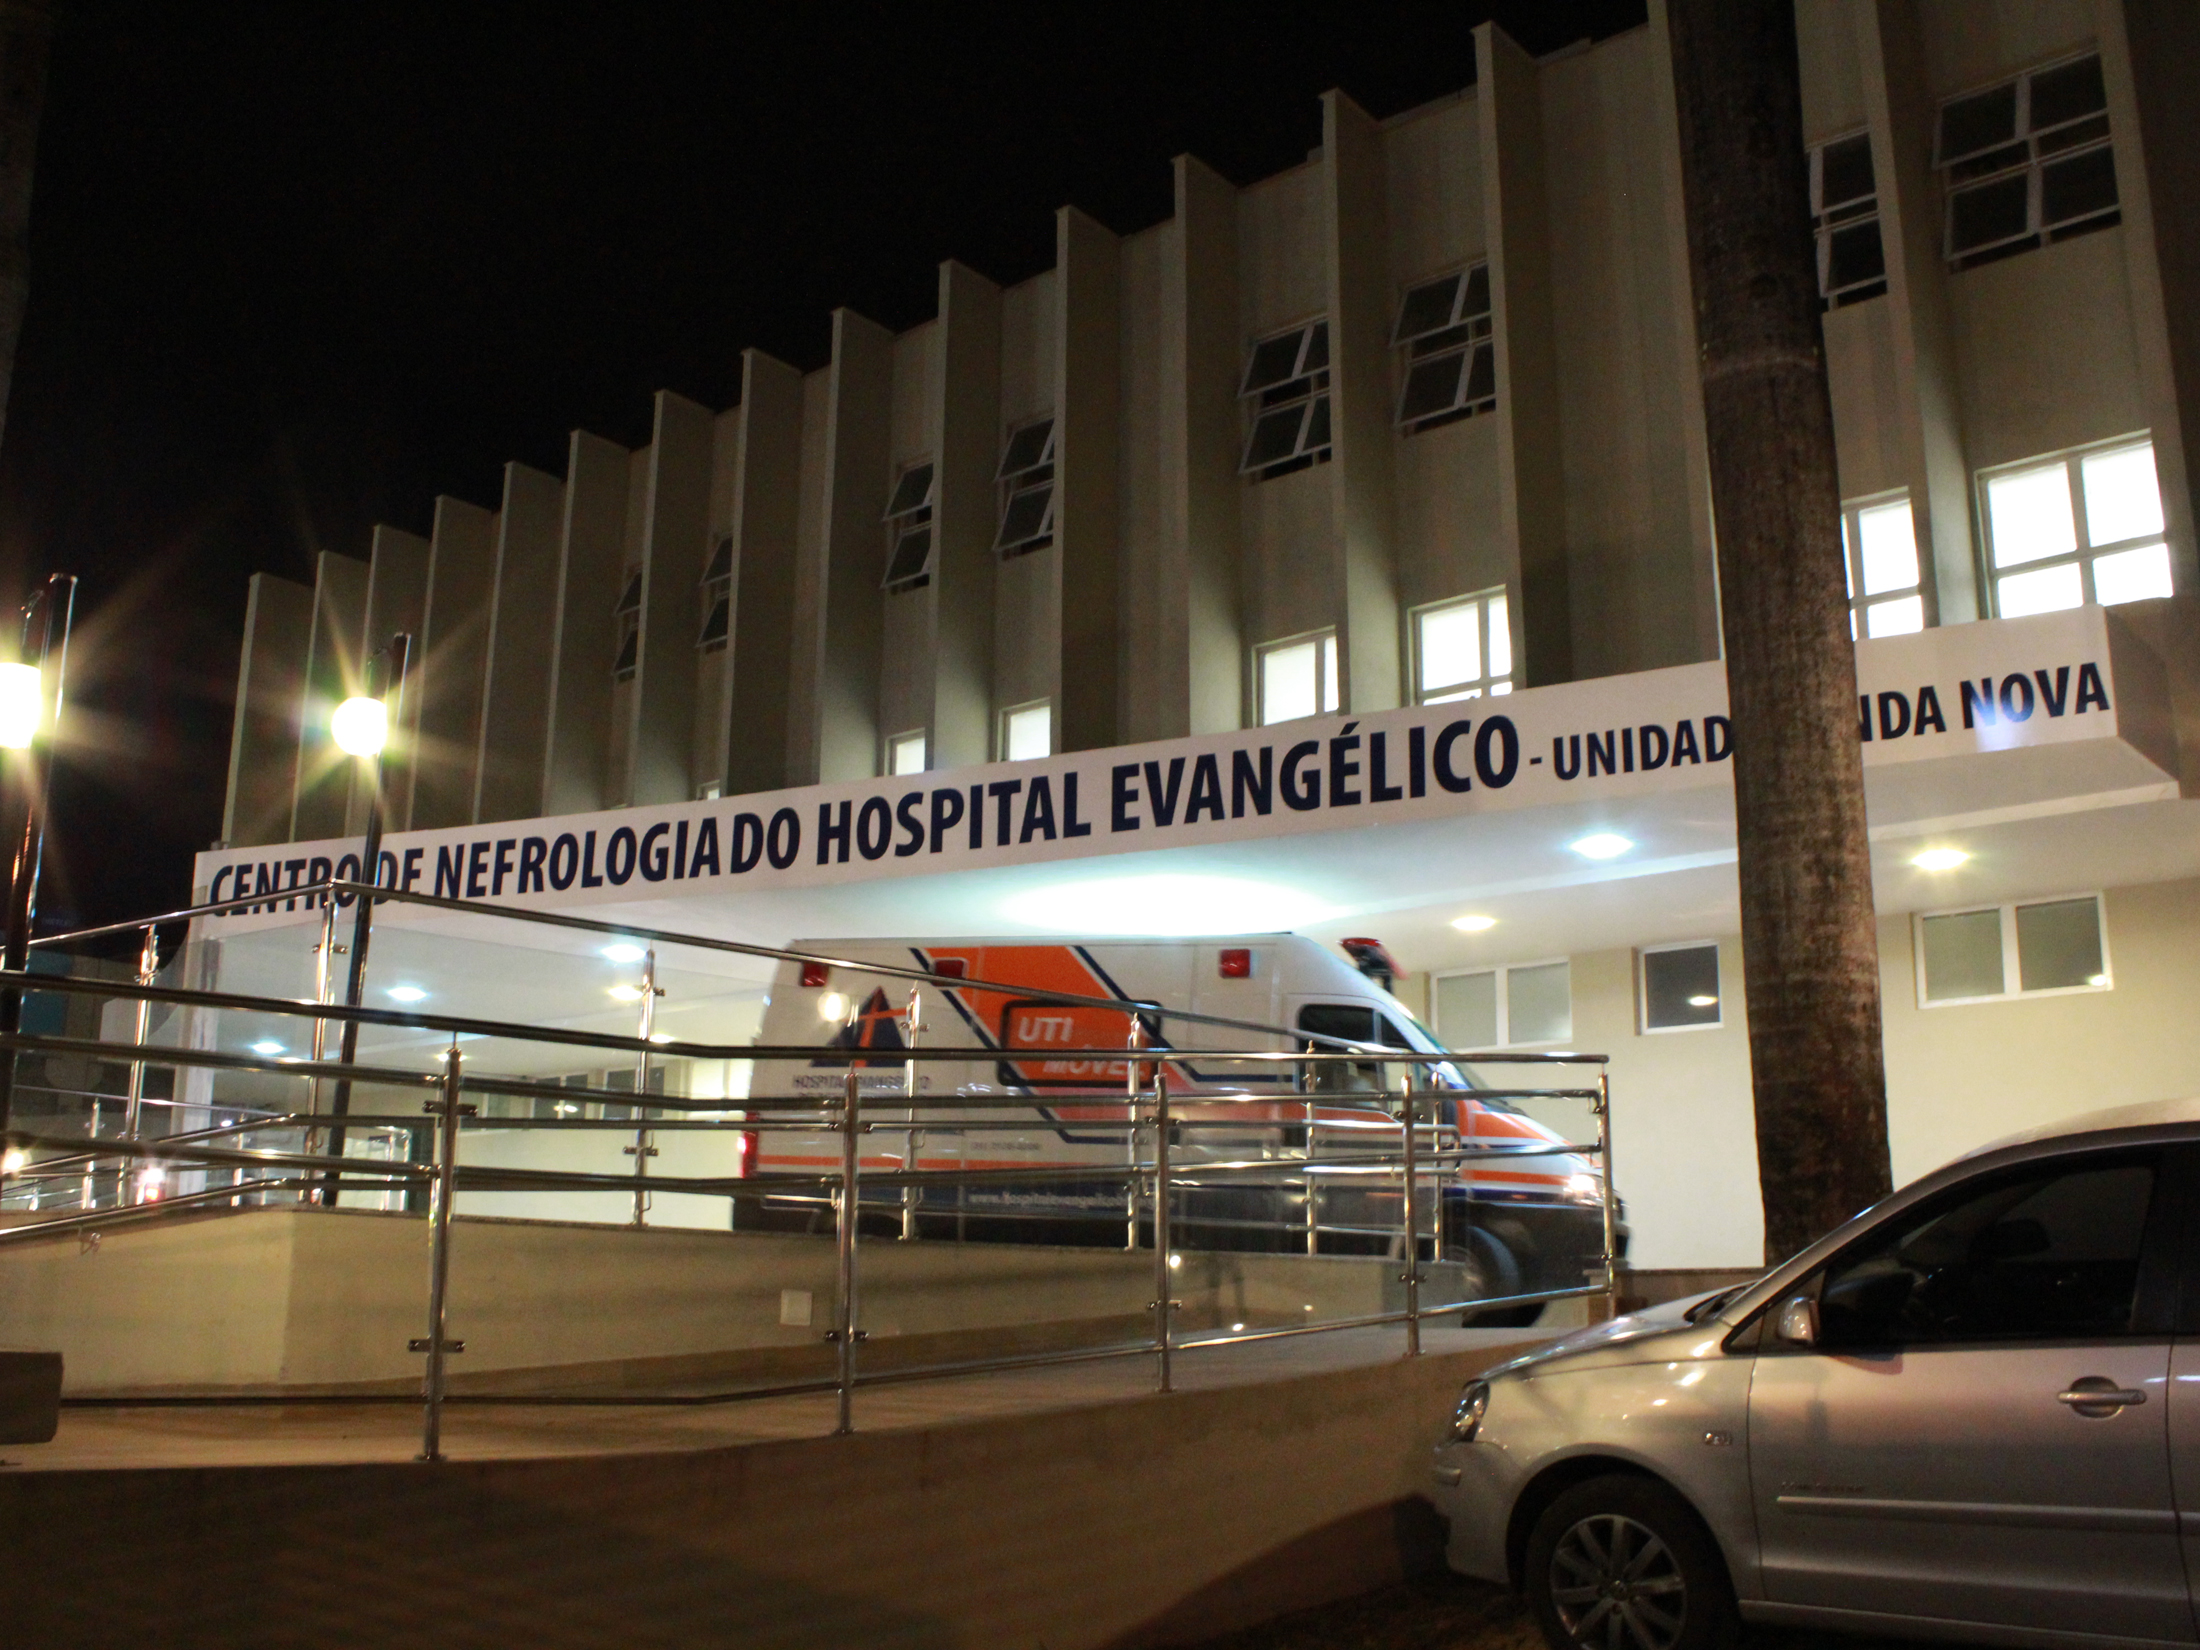 Hospital Evangélico de BH inaugura Centro de Especialidades - Medicina S/A